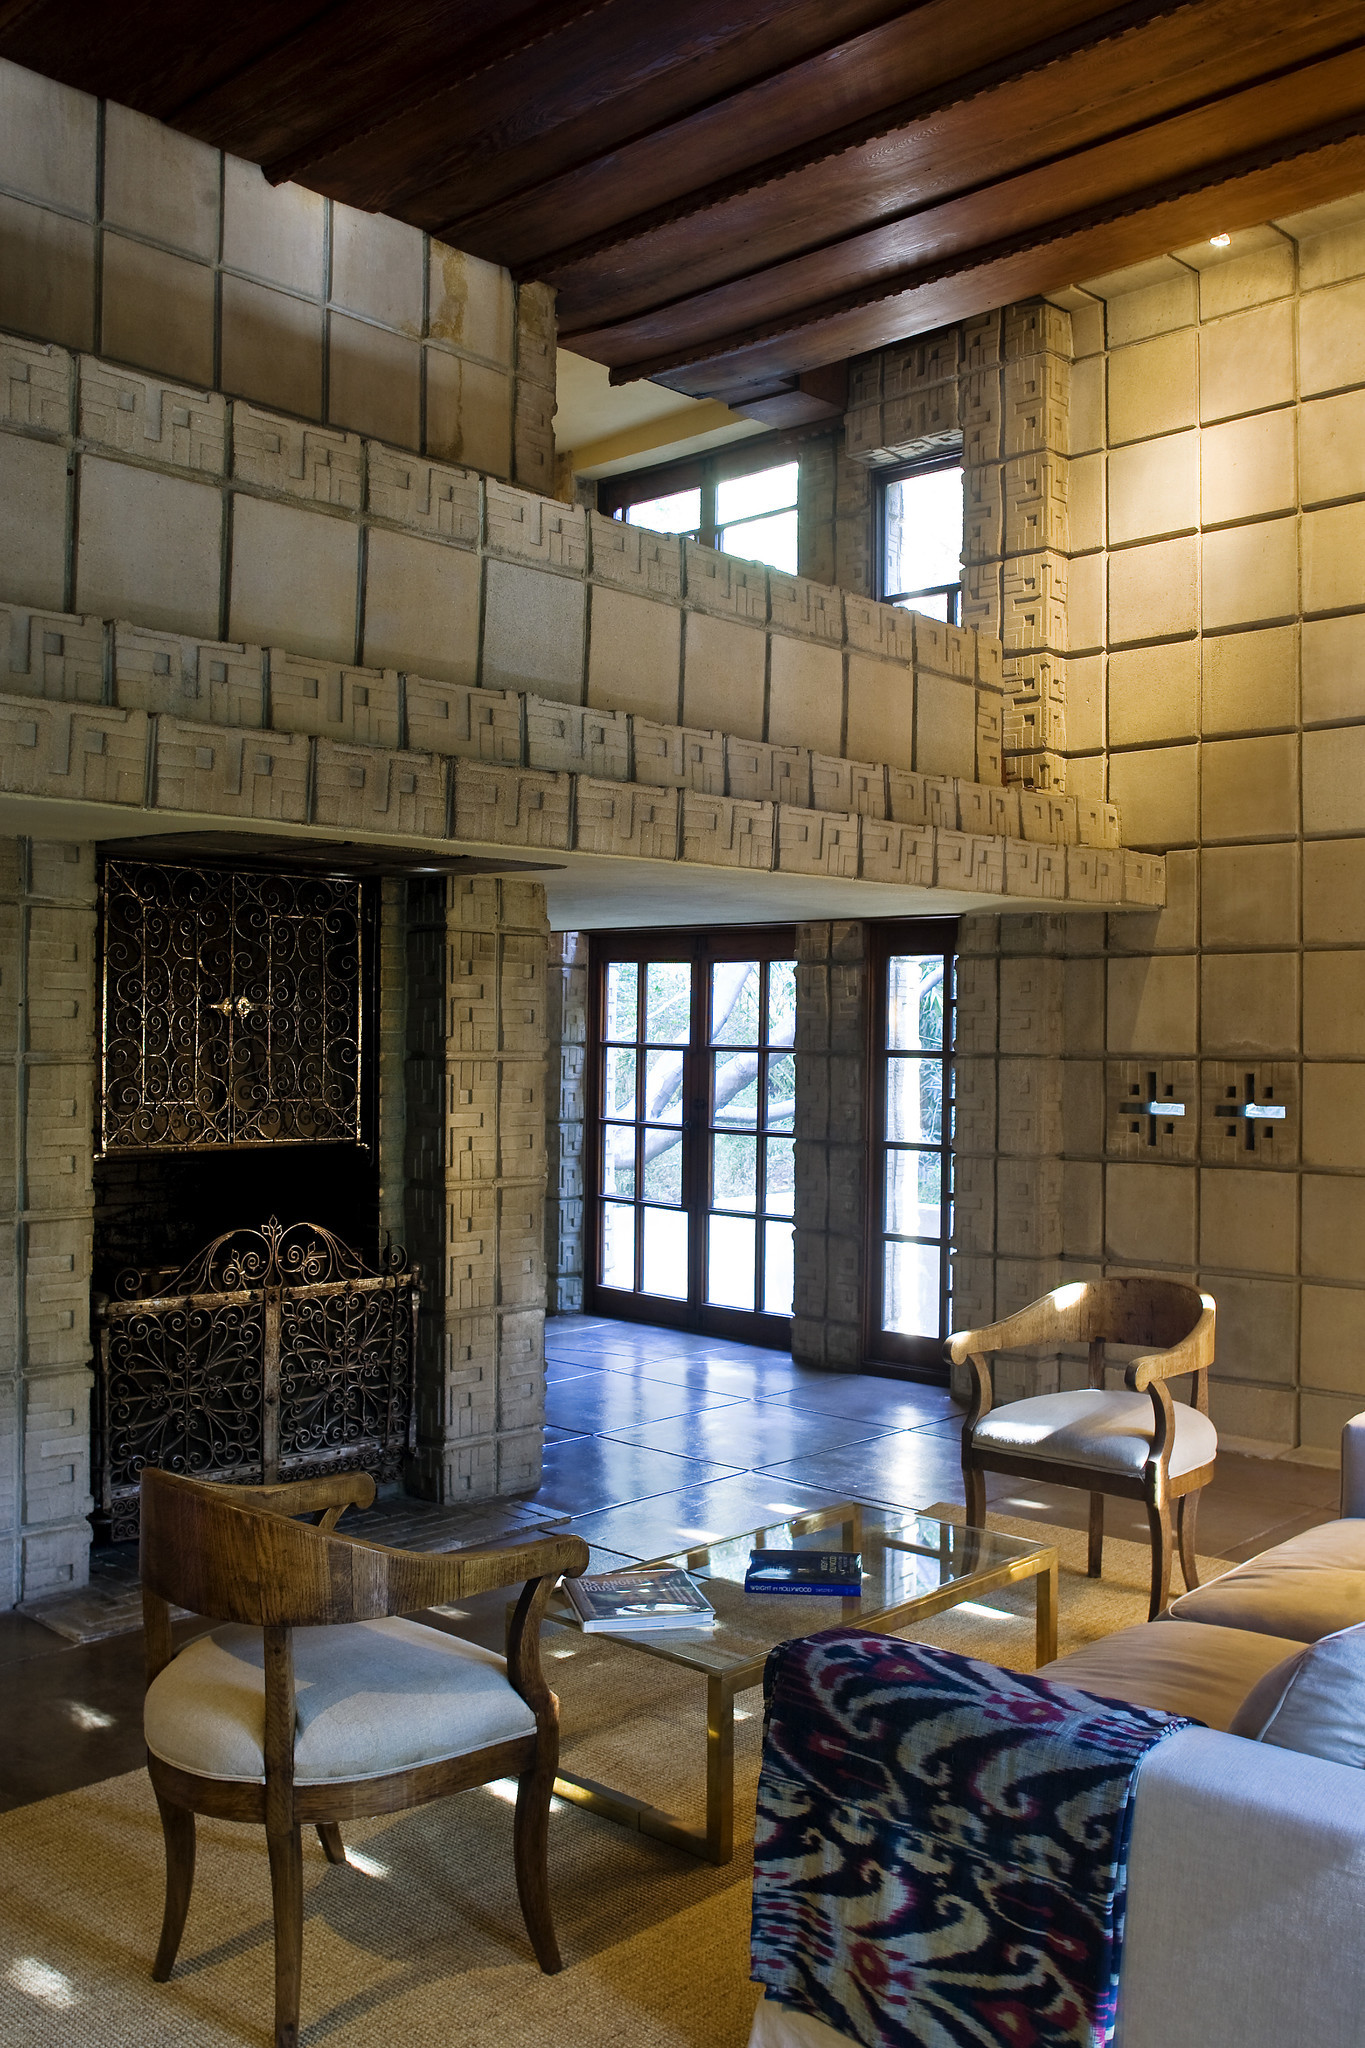 Mezzanine and fireplace inside "La Miniatura."